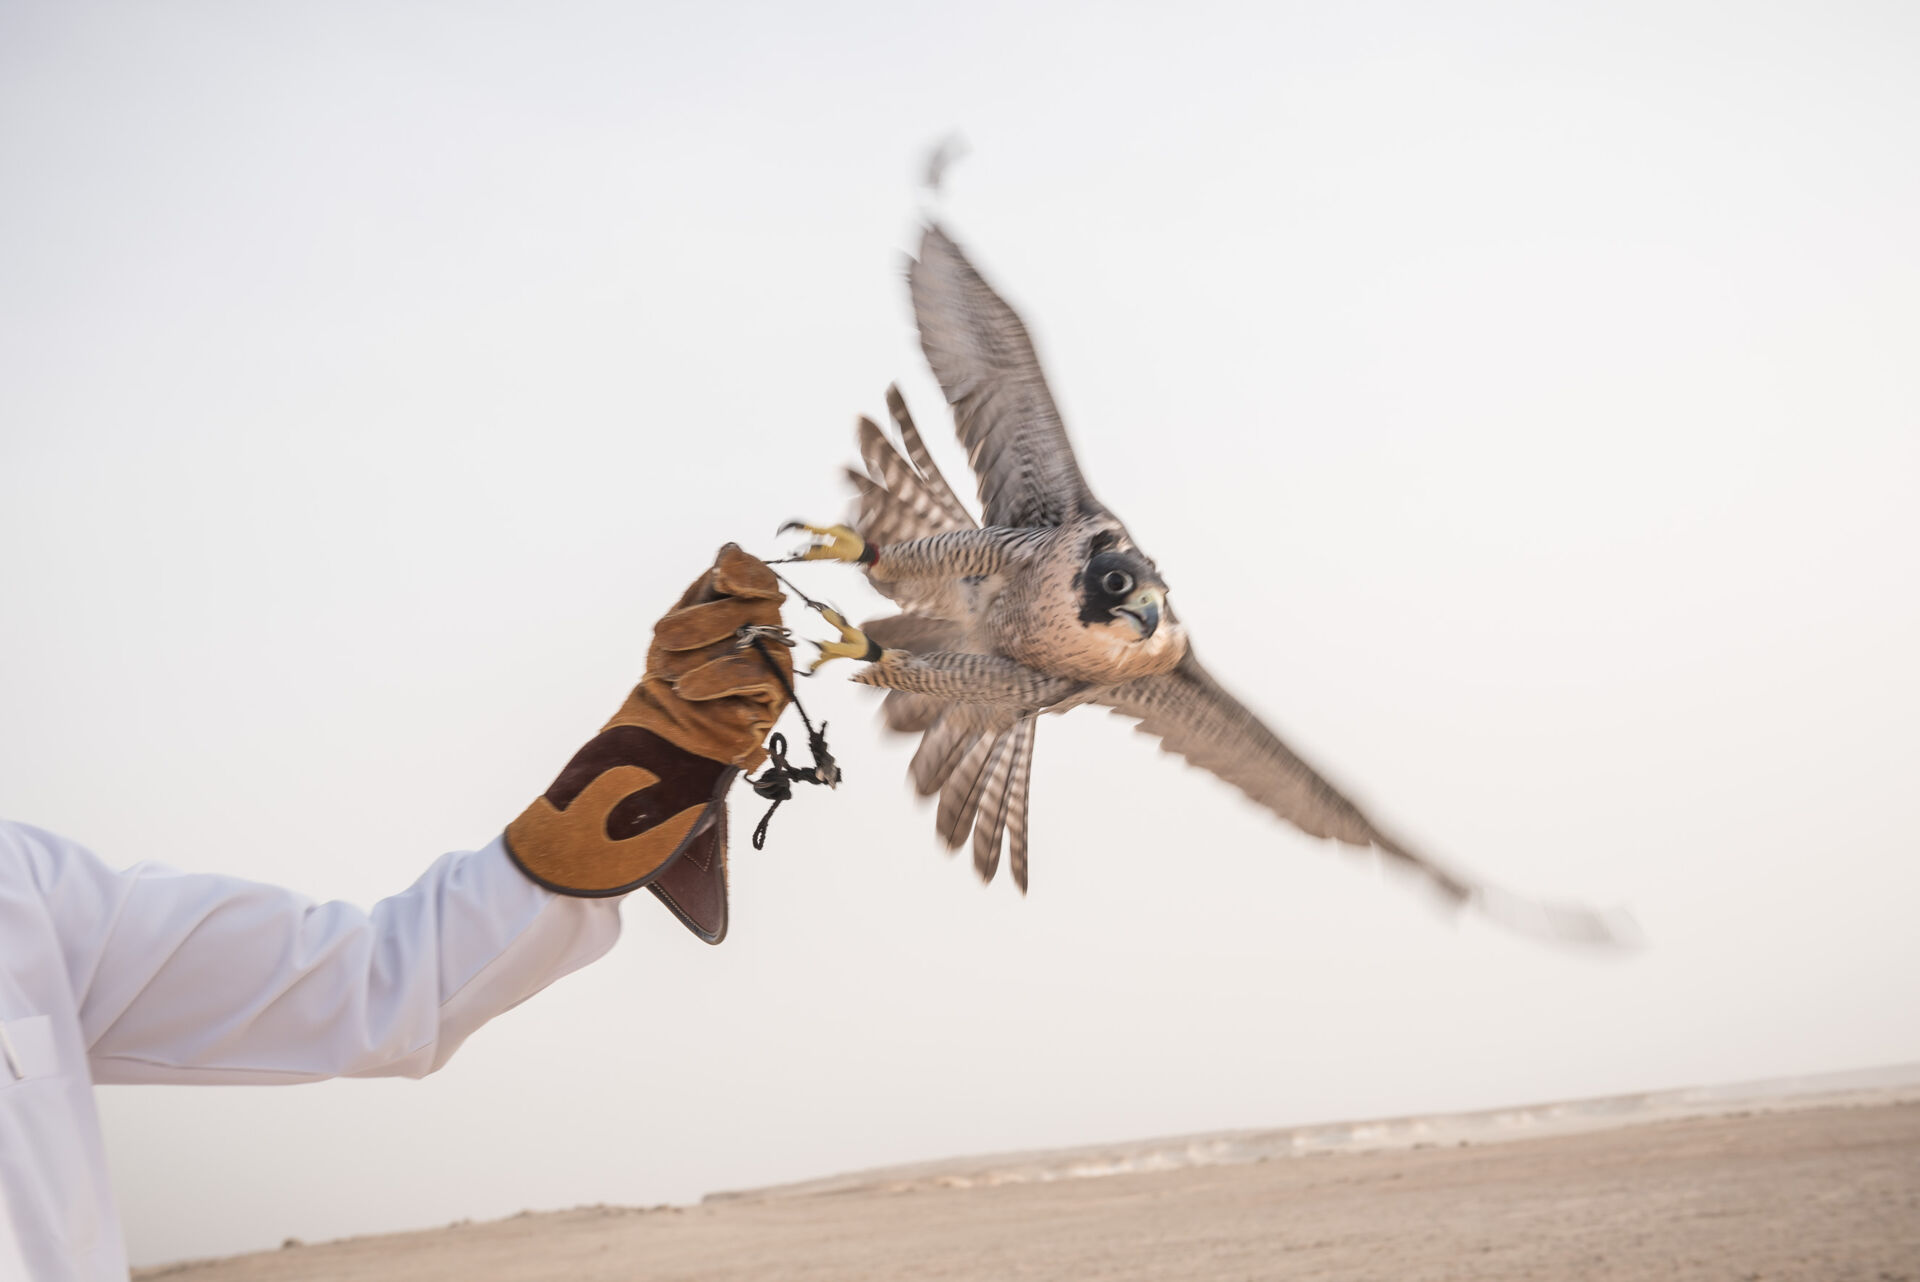 falcon travel qatar